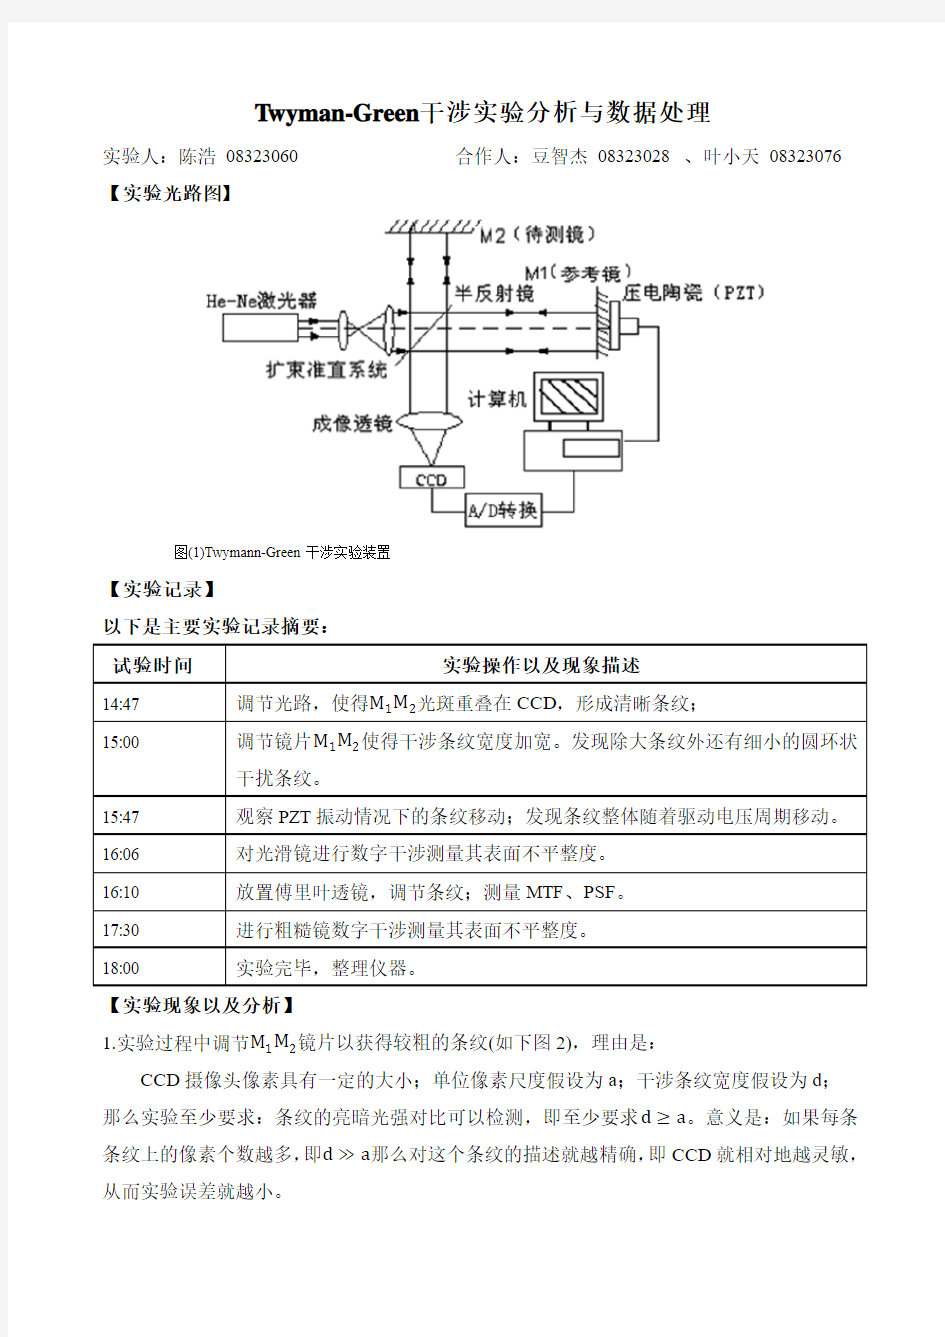 Twymann-Green 干涉数据处理报告-B1组-陈浩 中山大学理工院